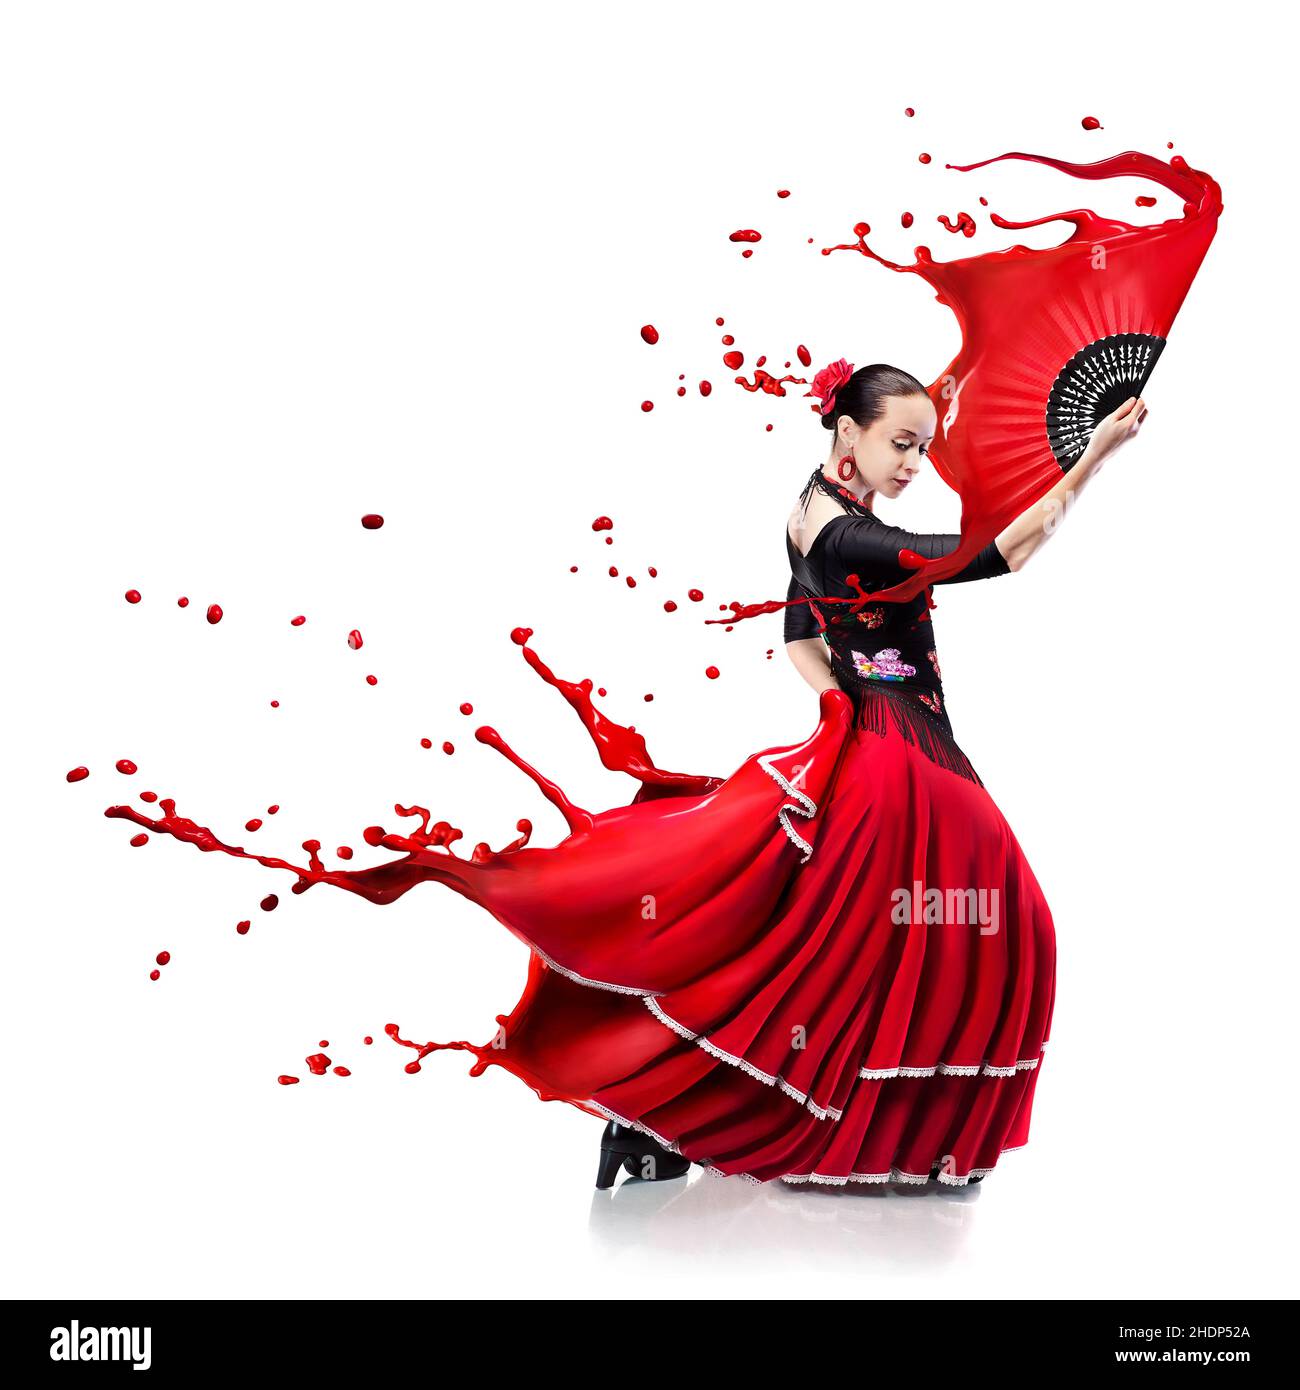 danse, flamenco, espagnol, danseur de flamenco, flamencos,les cultures espagnoles Banque D'Images